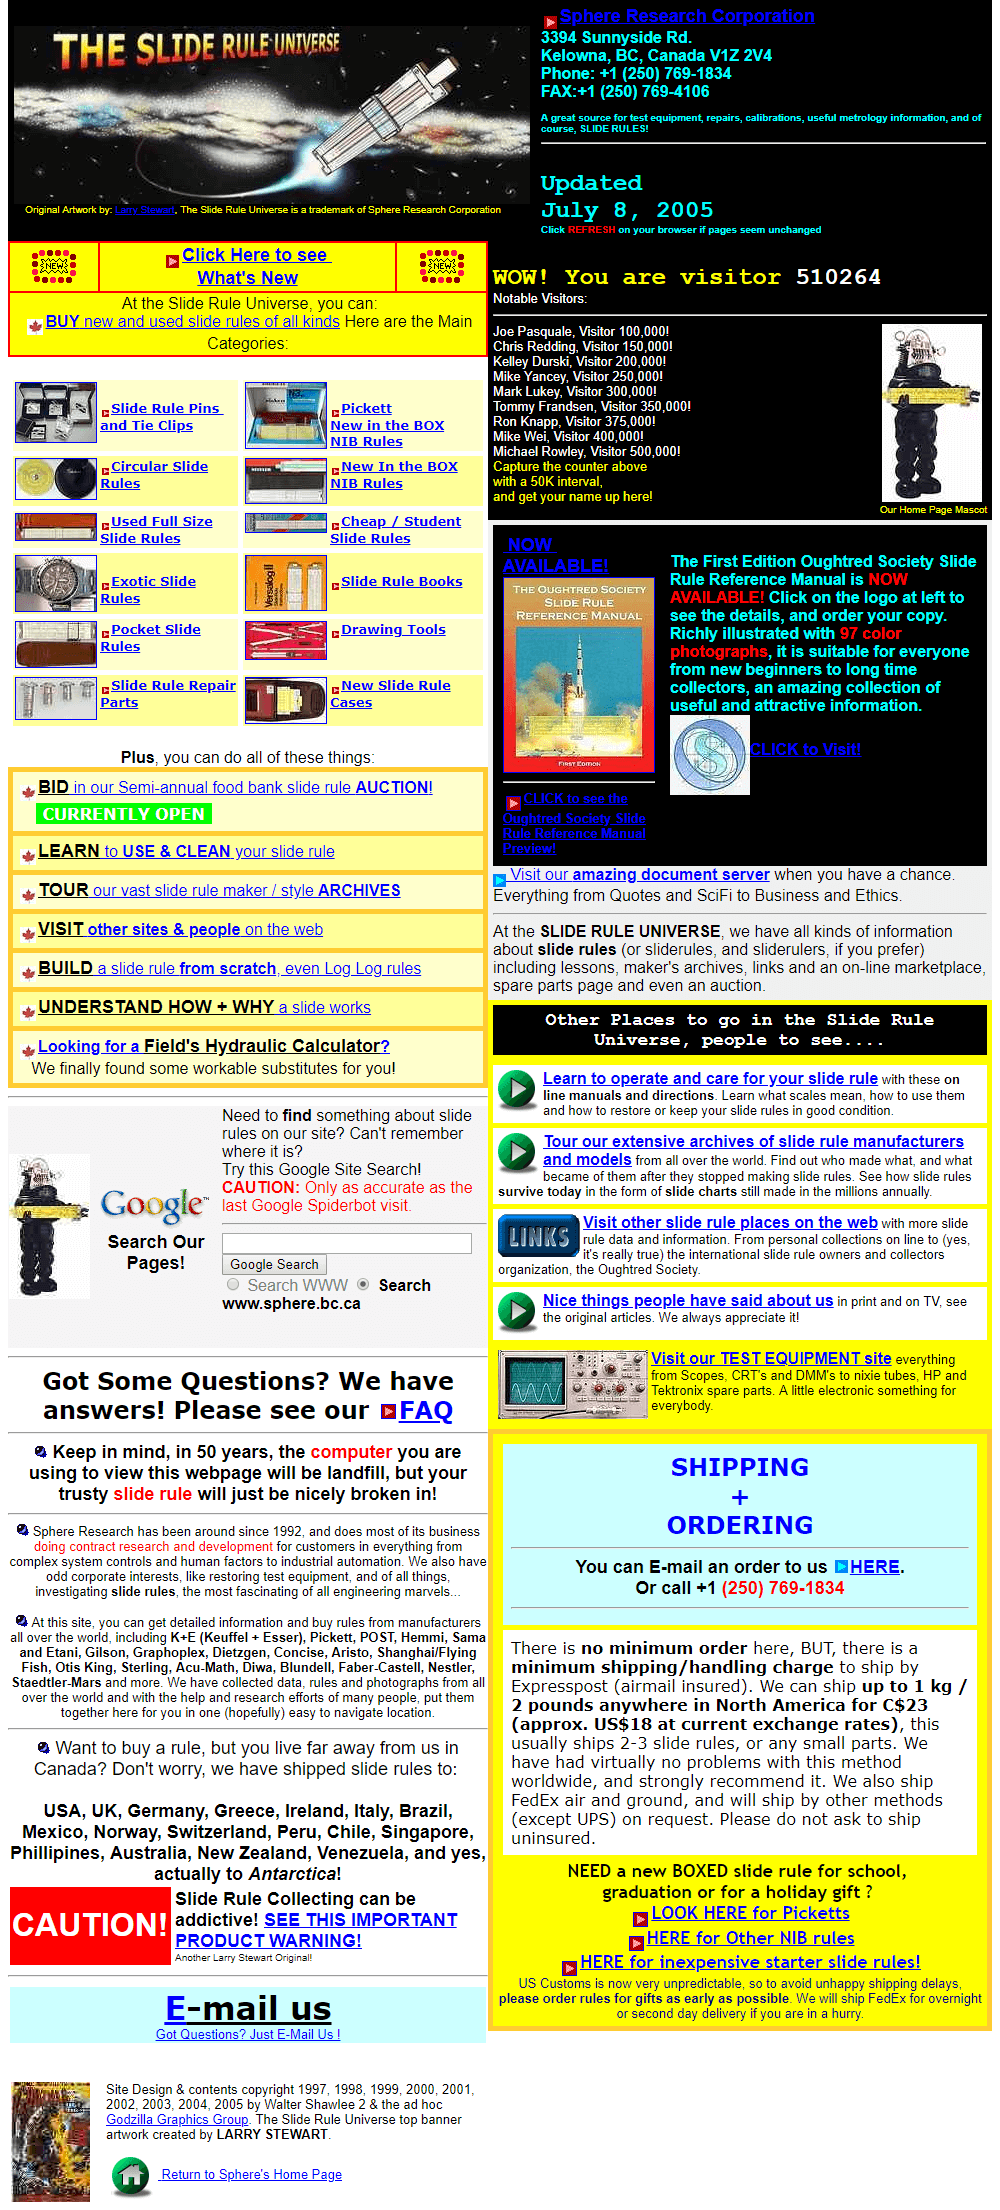 The Slide Rule Universe website in 2006